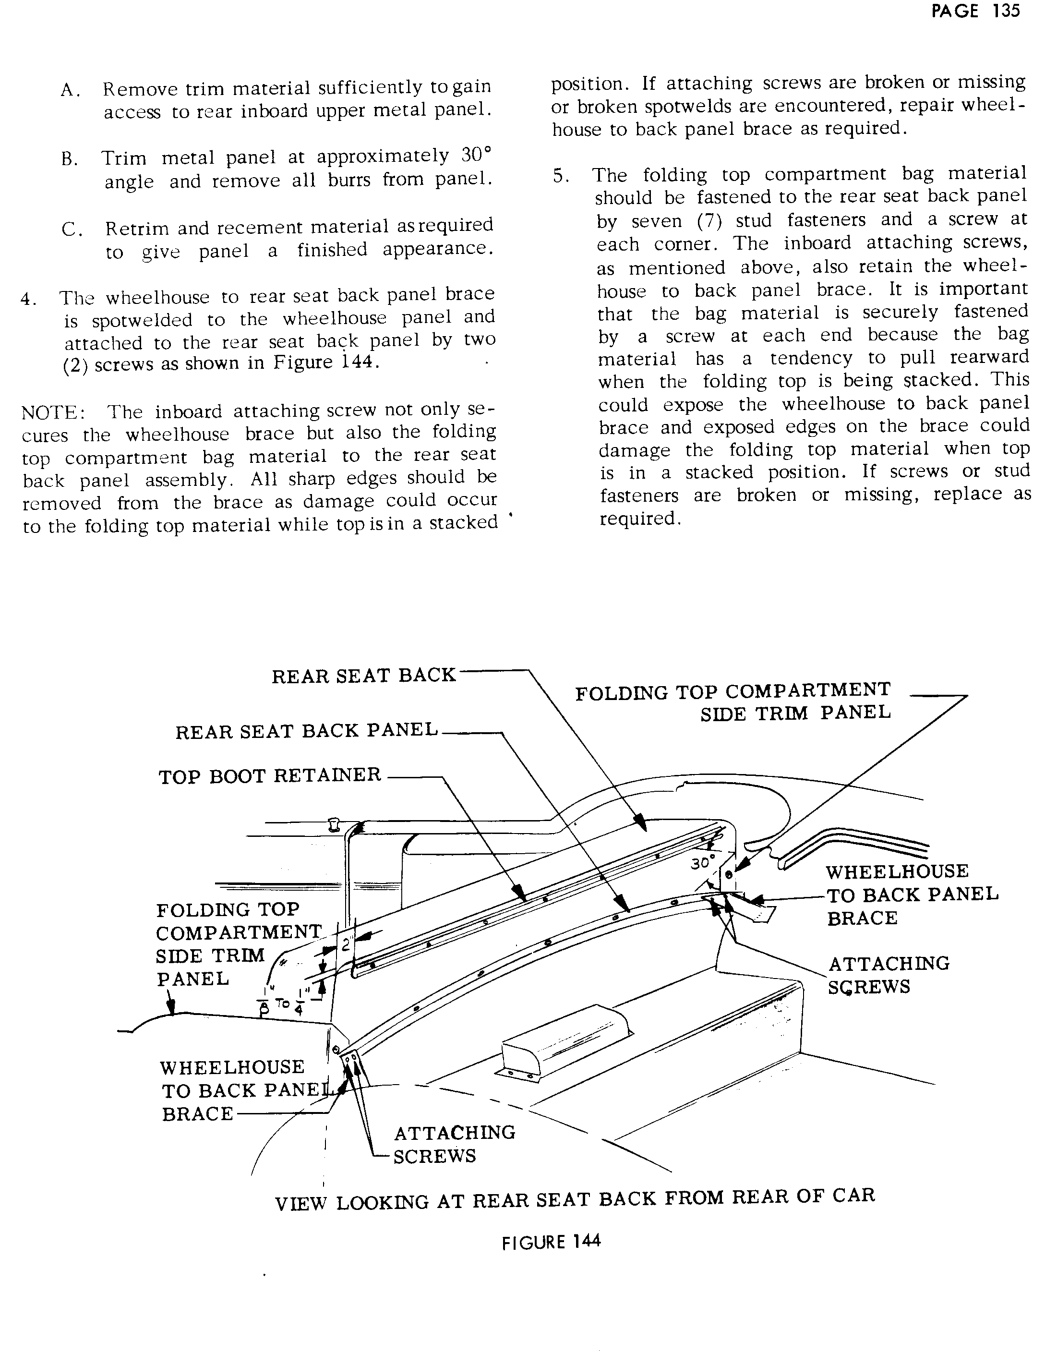 n_1957 Buick Product Service  Bulletins-136-136.jpg